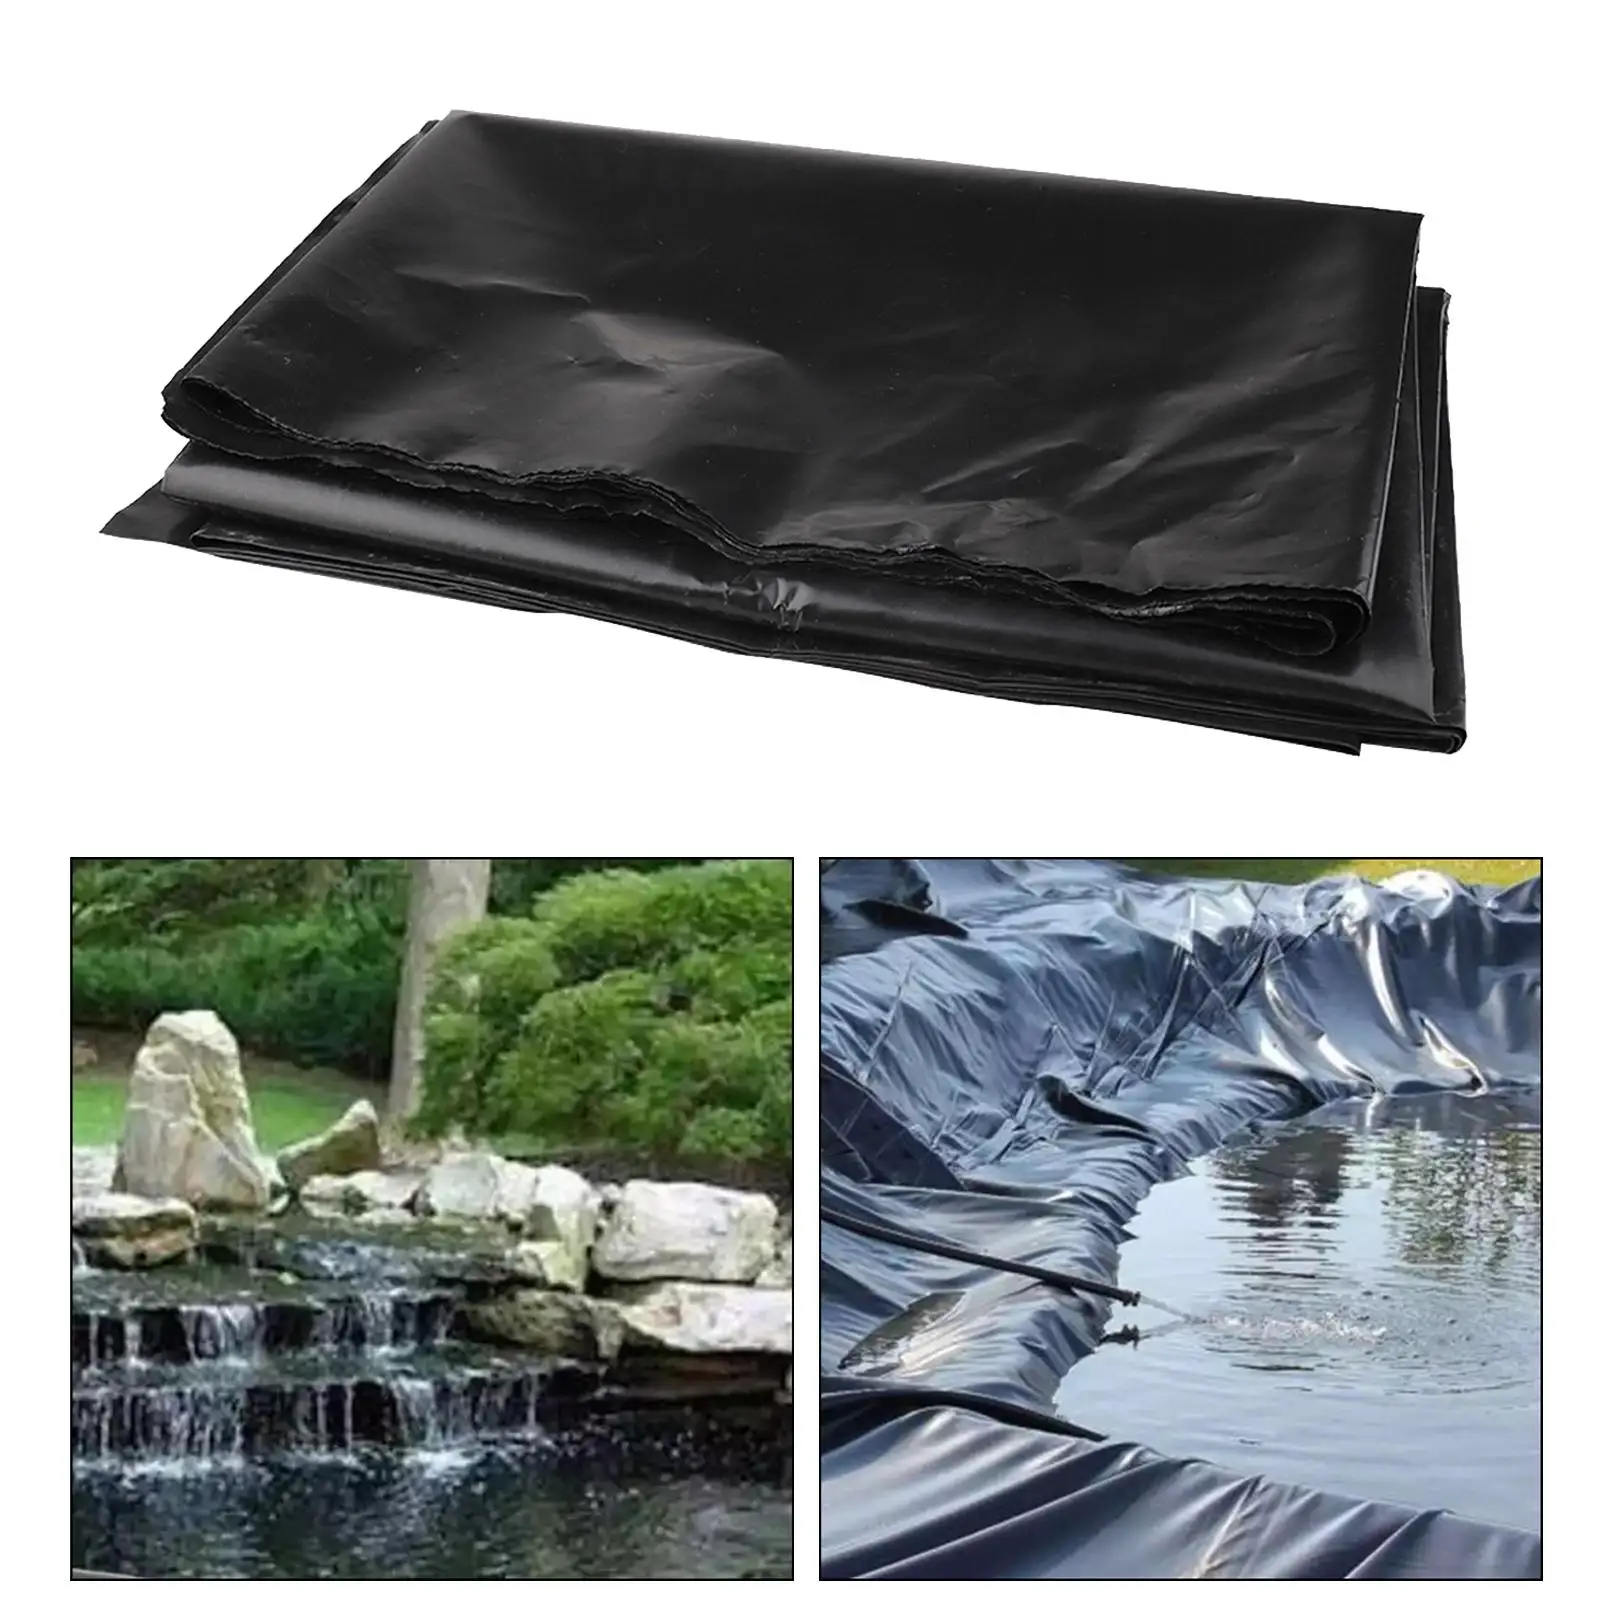 Impermeable Film Tear-Resistant Waterproof for Fish Pond Black